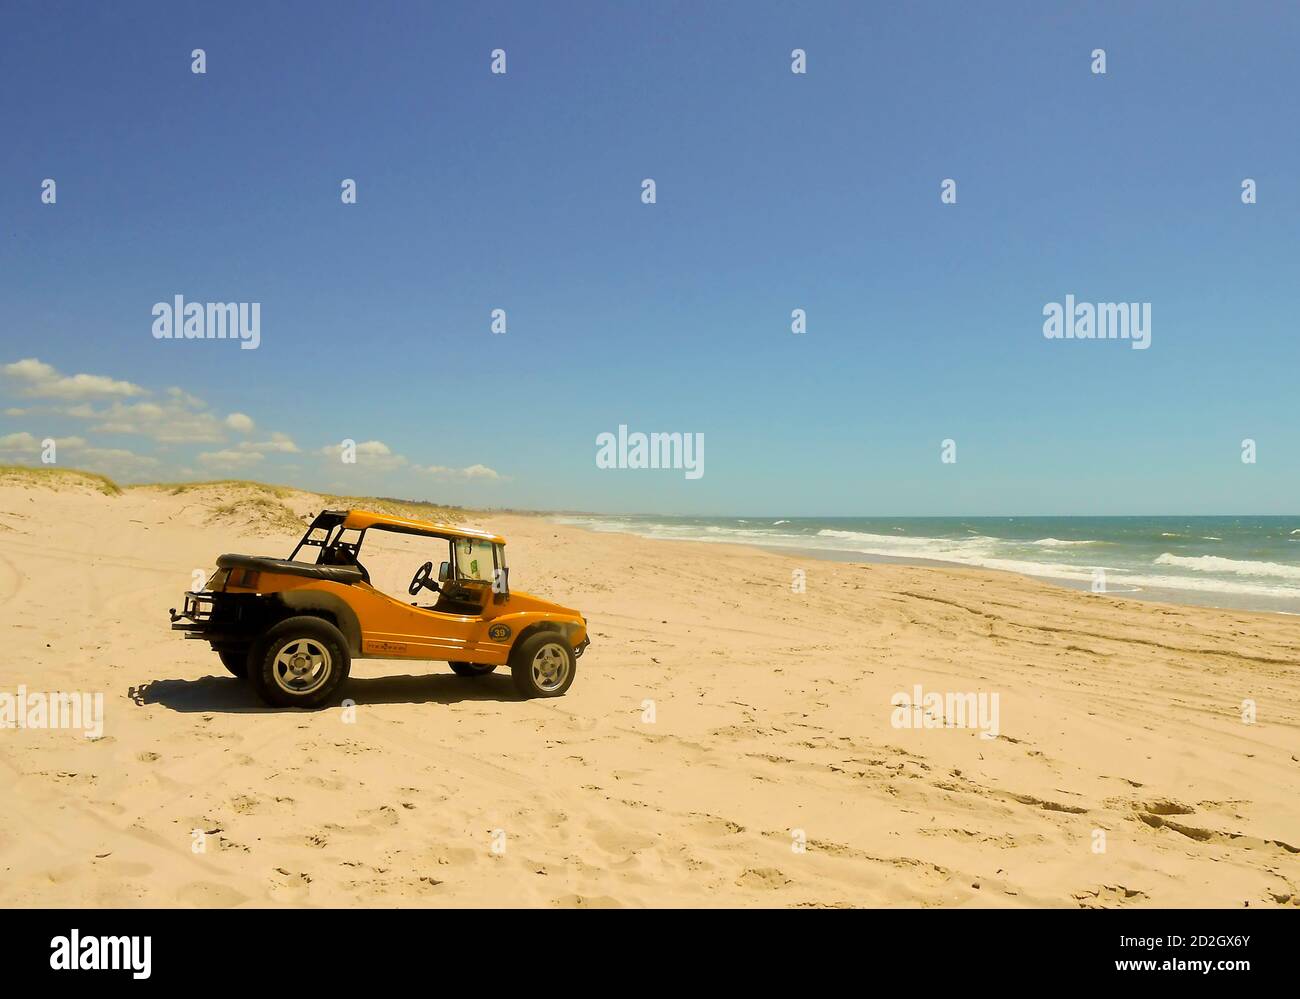 Beach buggy on beach with copy space Stock Photo